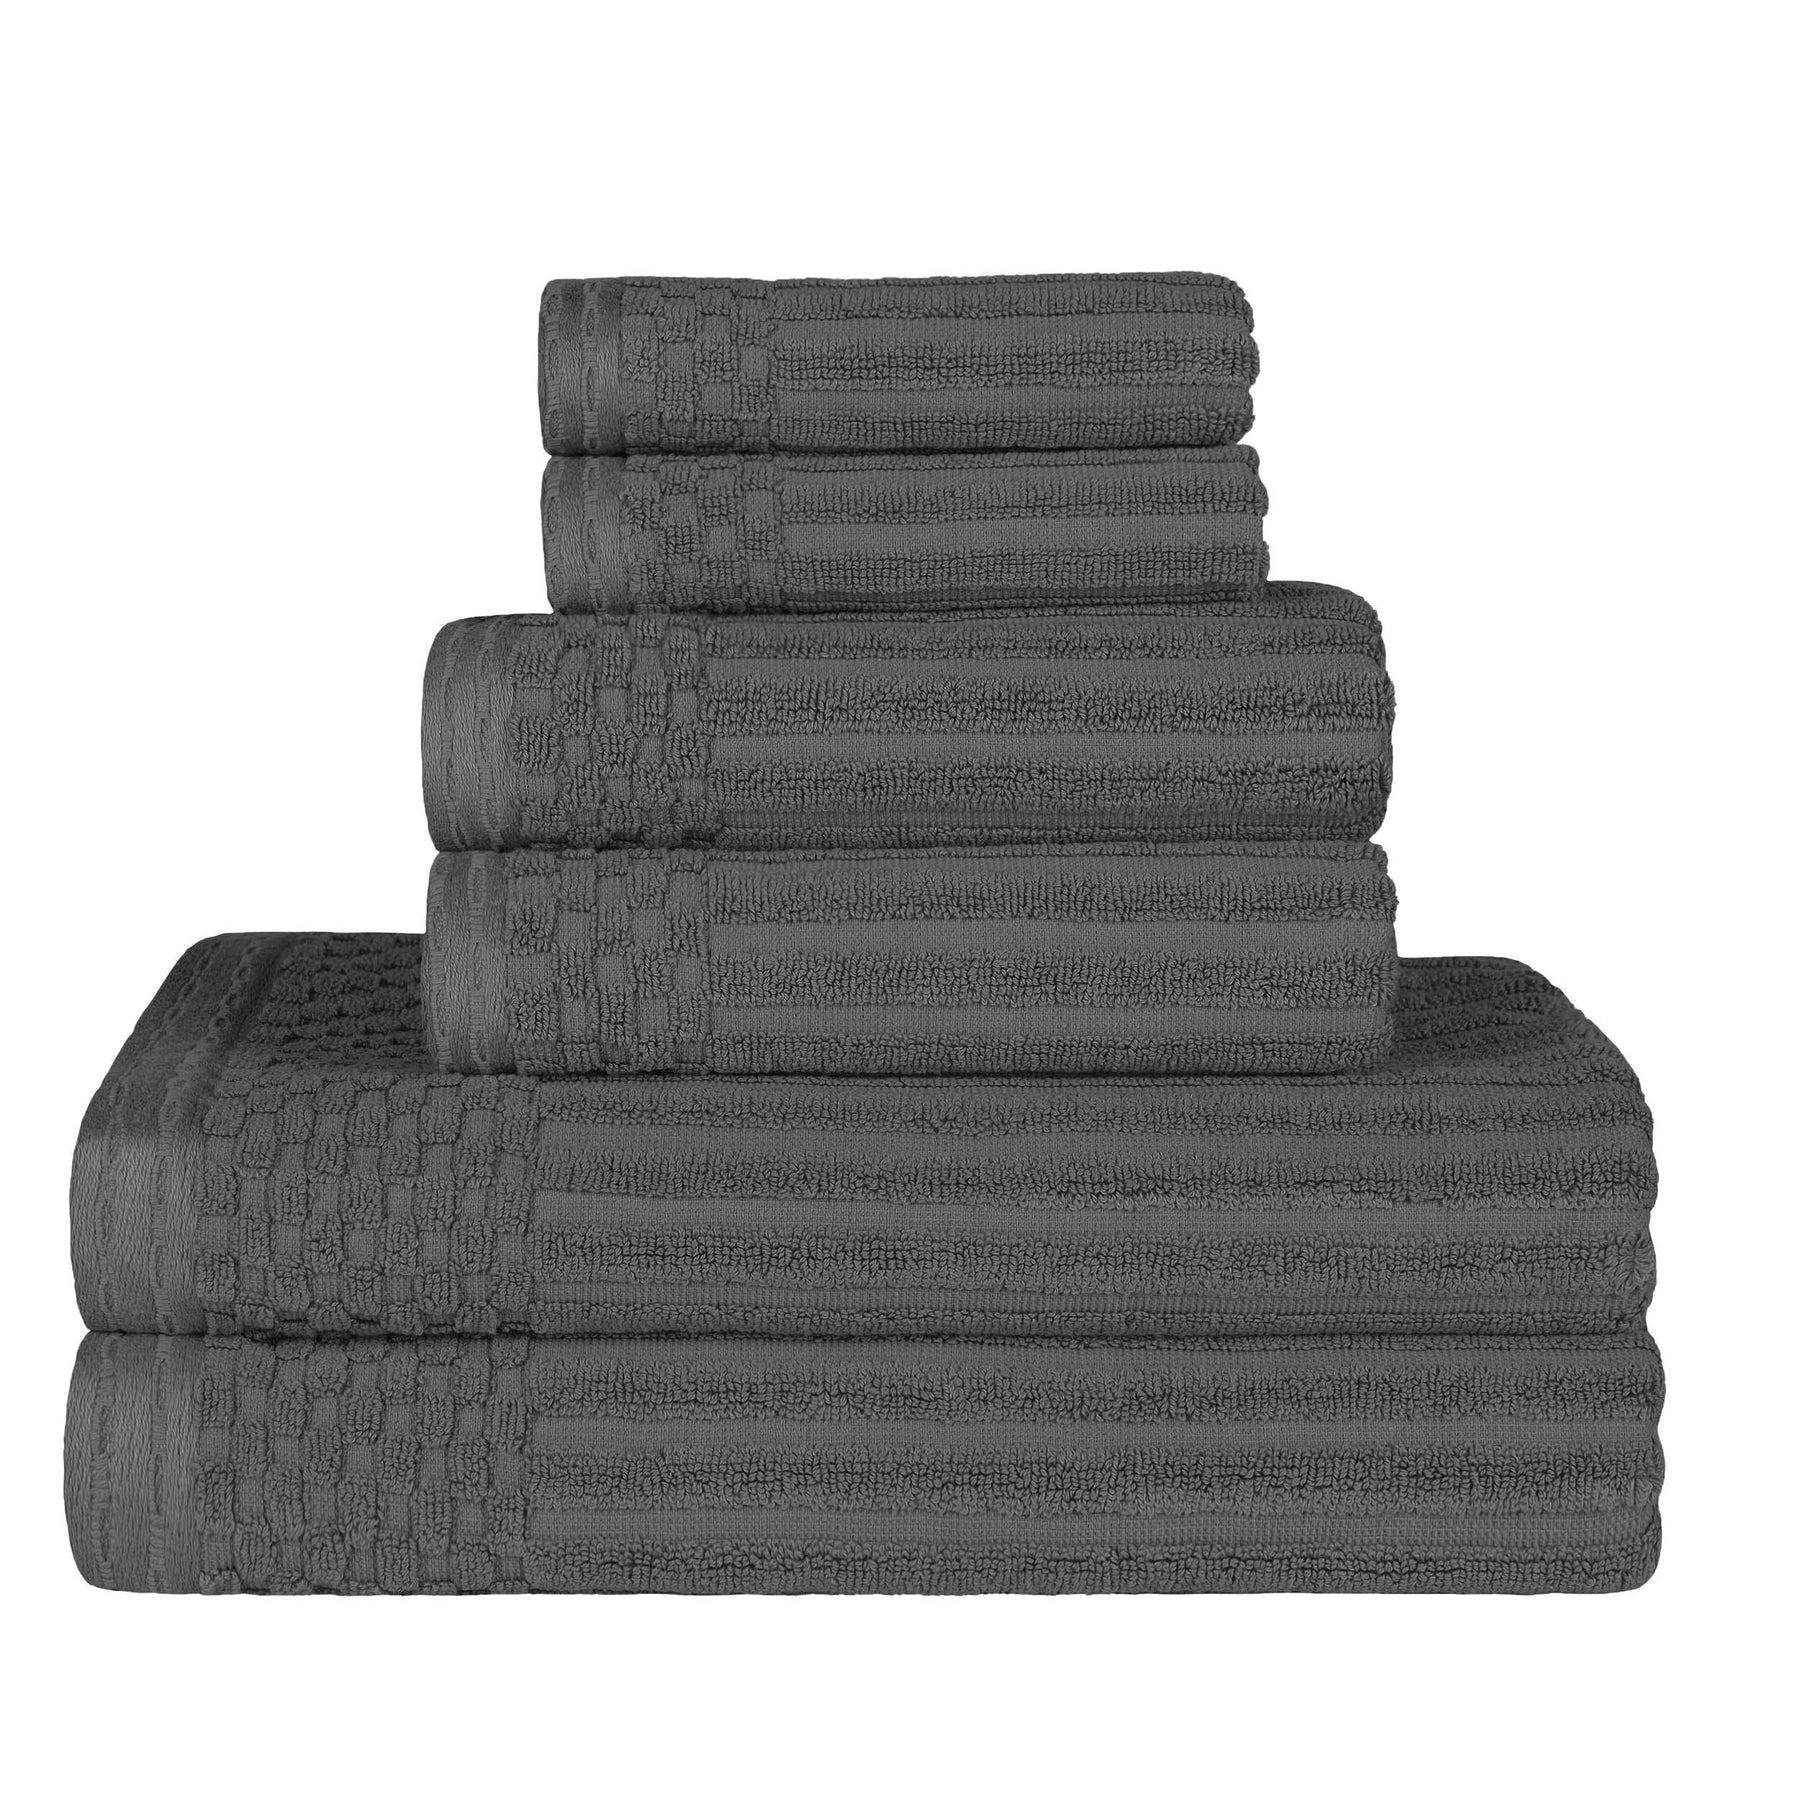 Ribbed Textured Cotton Medium Weight 6 Piece Towel Set - Charcoal